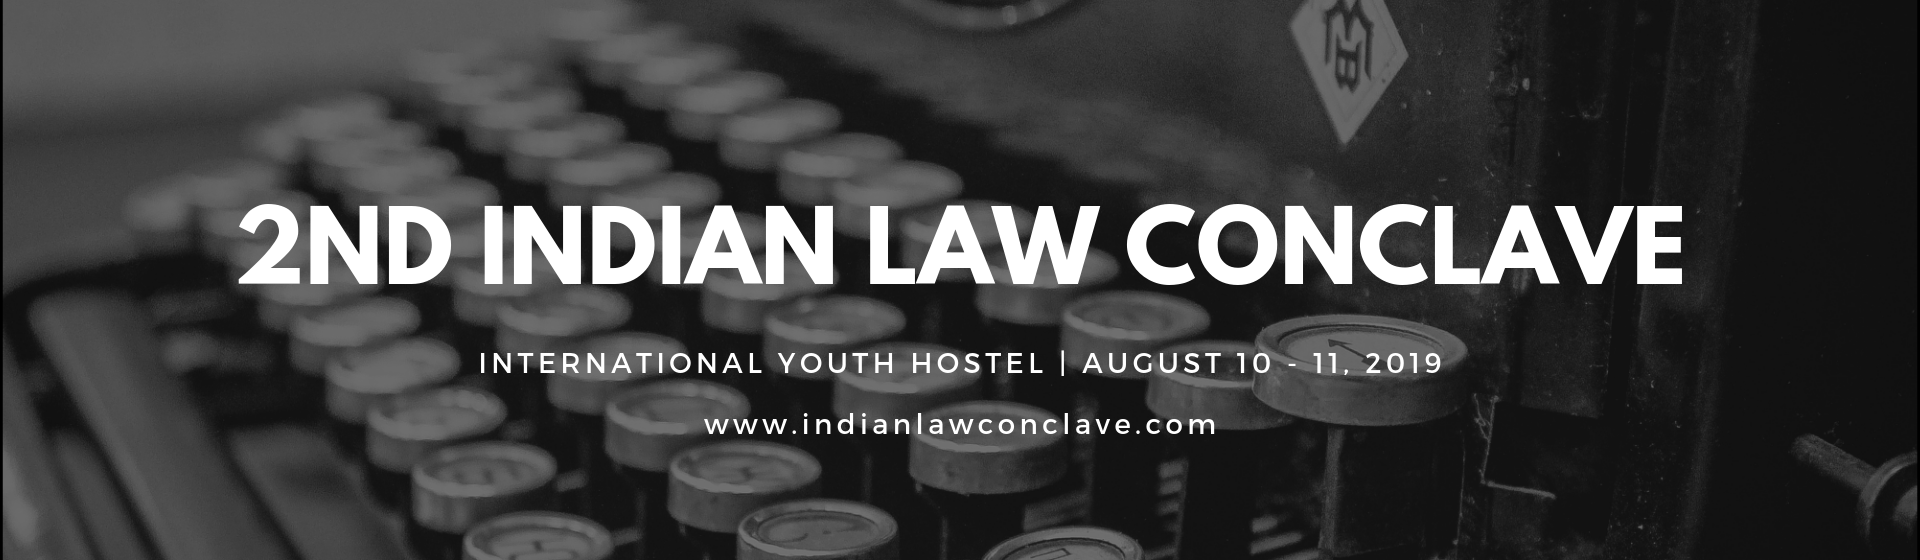 2nd Indian Law Conclave 2019, Central Delhi, Delhi, India